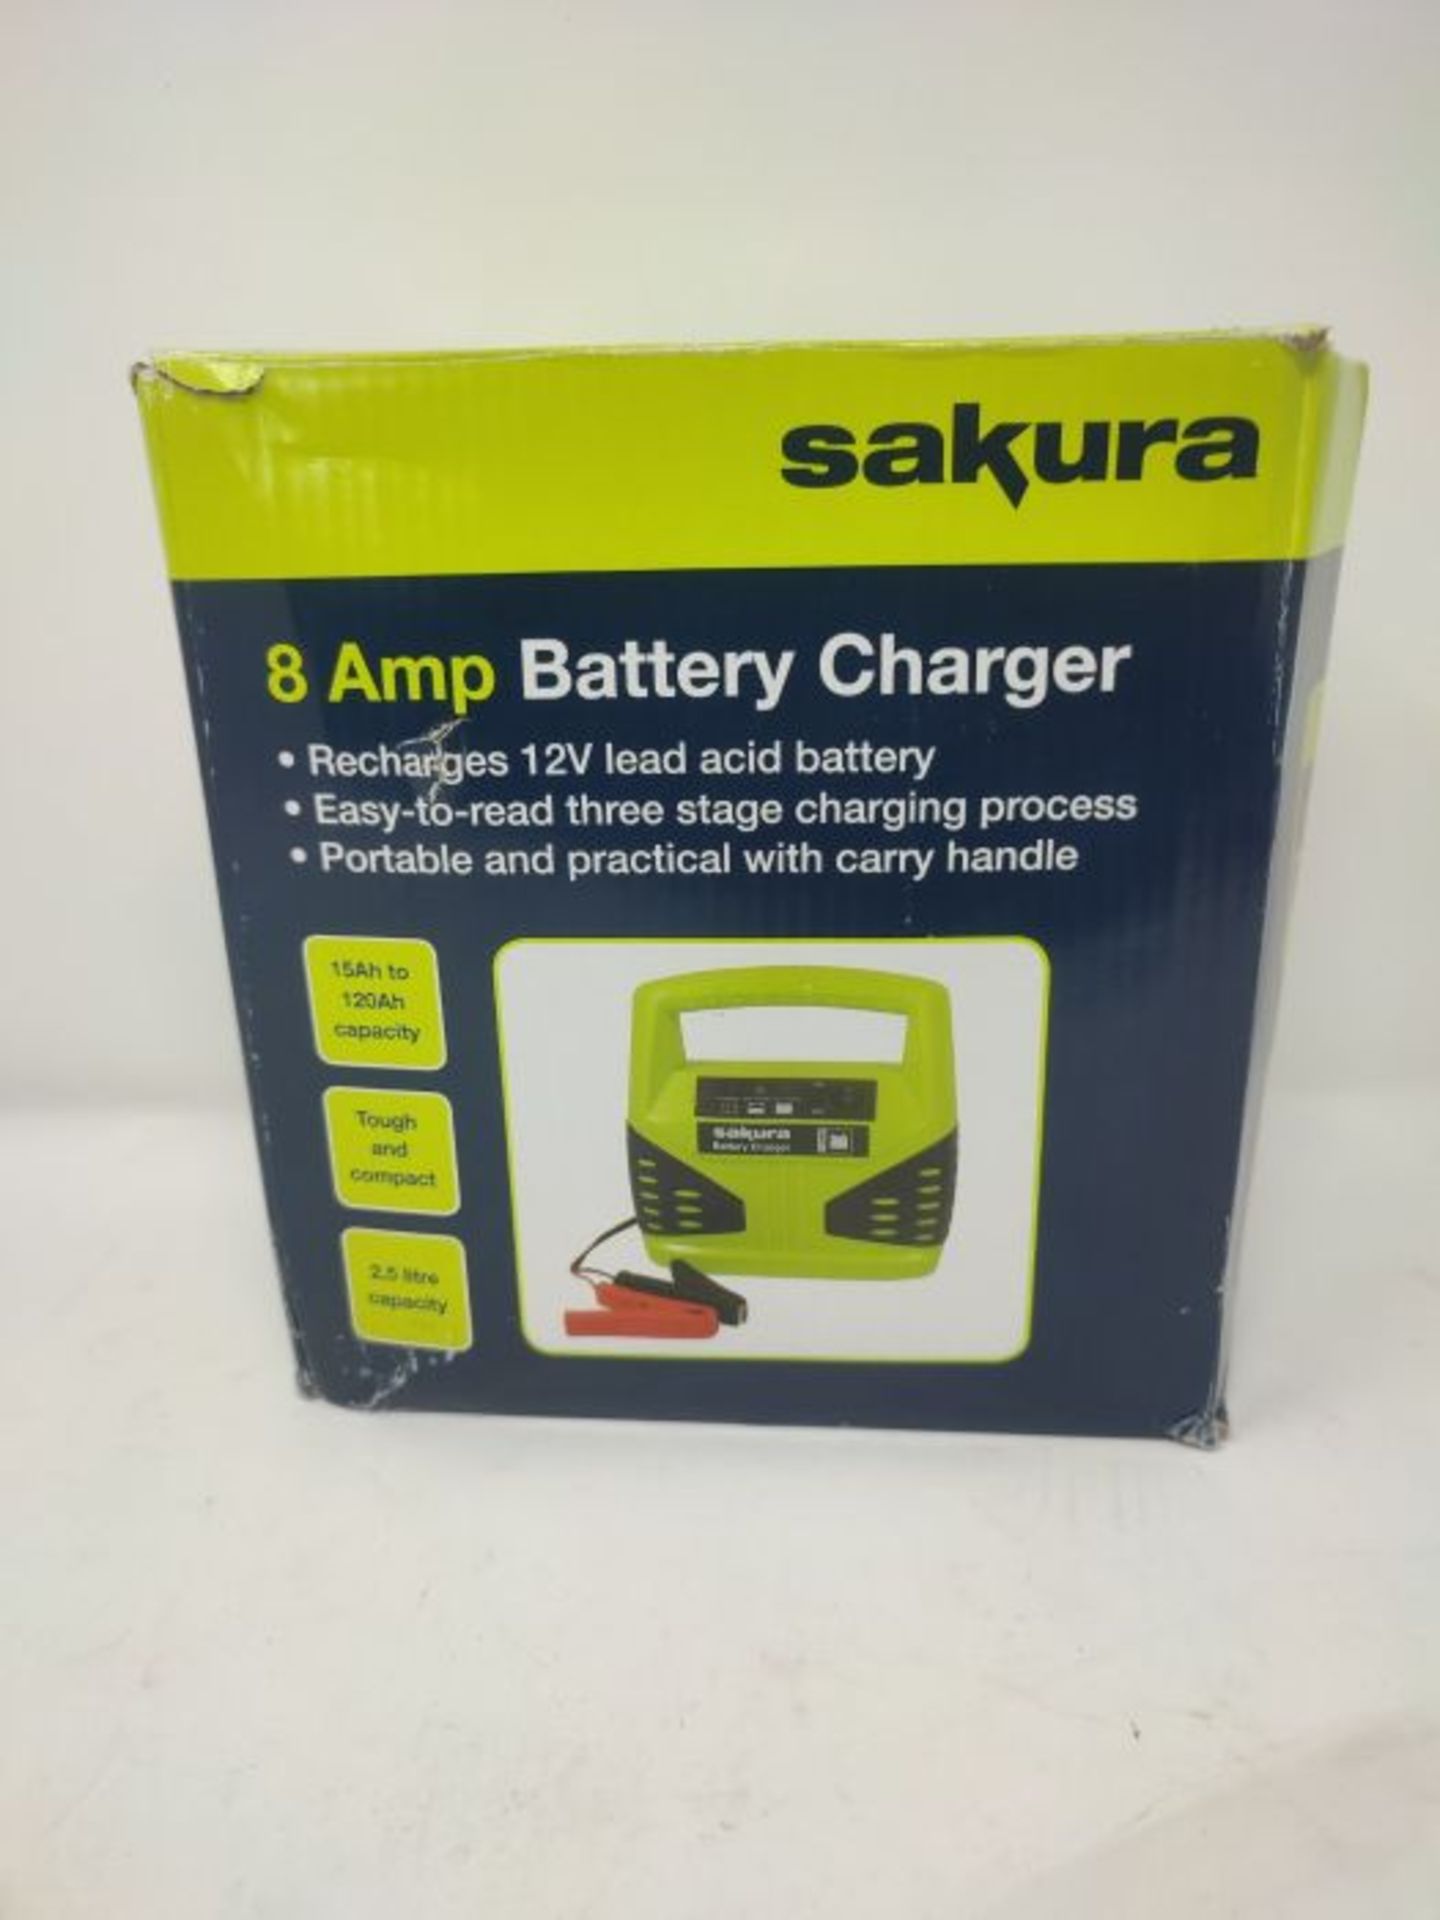 Sakura 8 Amp 12 V Car Battery Charger SS3631  For Vehicles Up To 2.5L / 2500CC - Le - Image 2 of 3